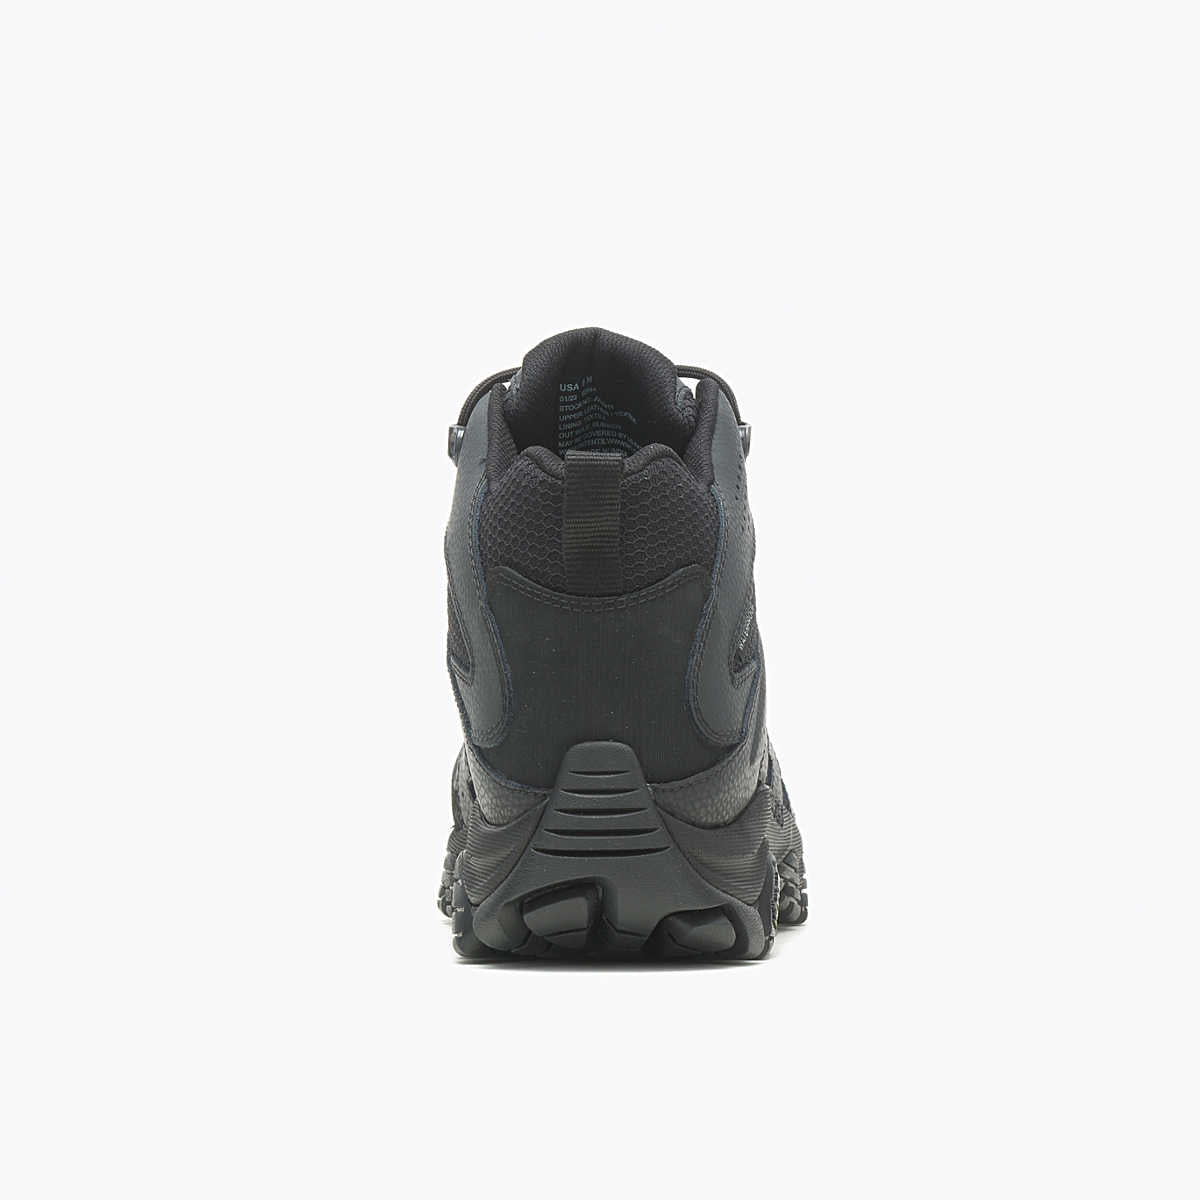 Merrell J003911 Mid Tactical Waterproof Men's Boots Black 9 Gear Australia by G8